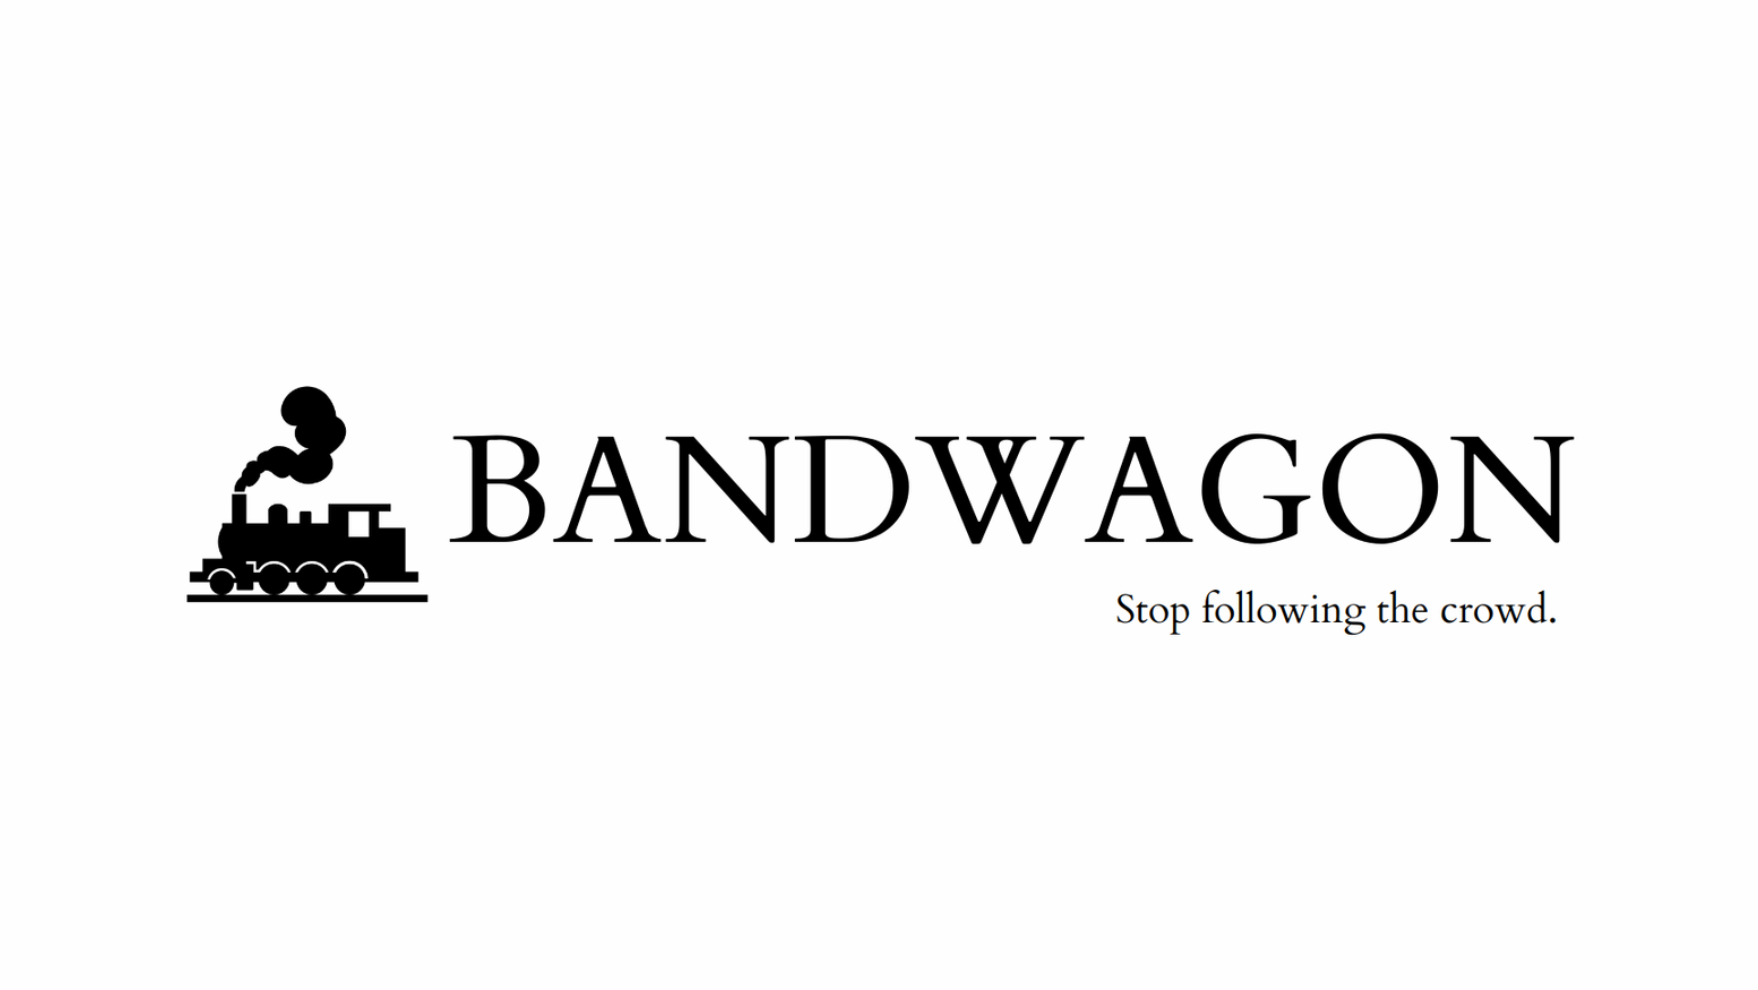 Bandwagon - A private voting protocol